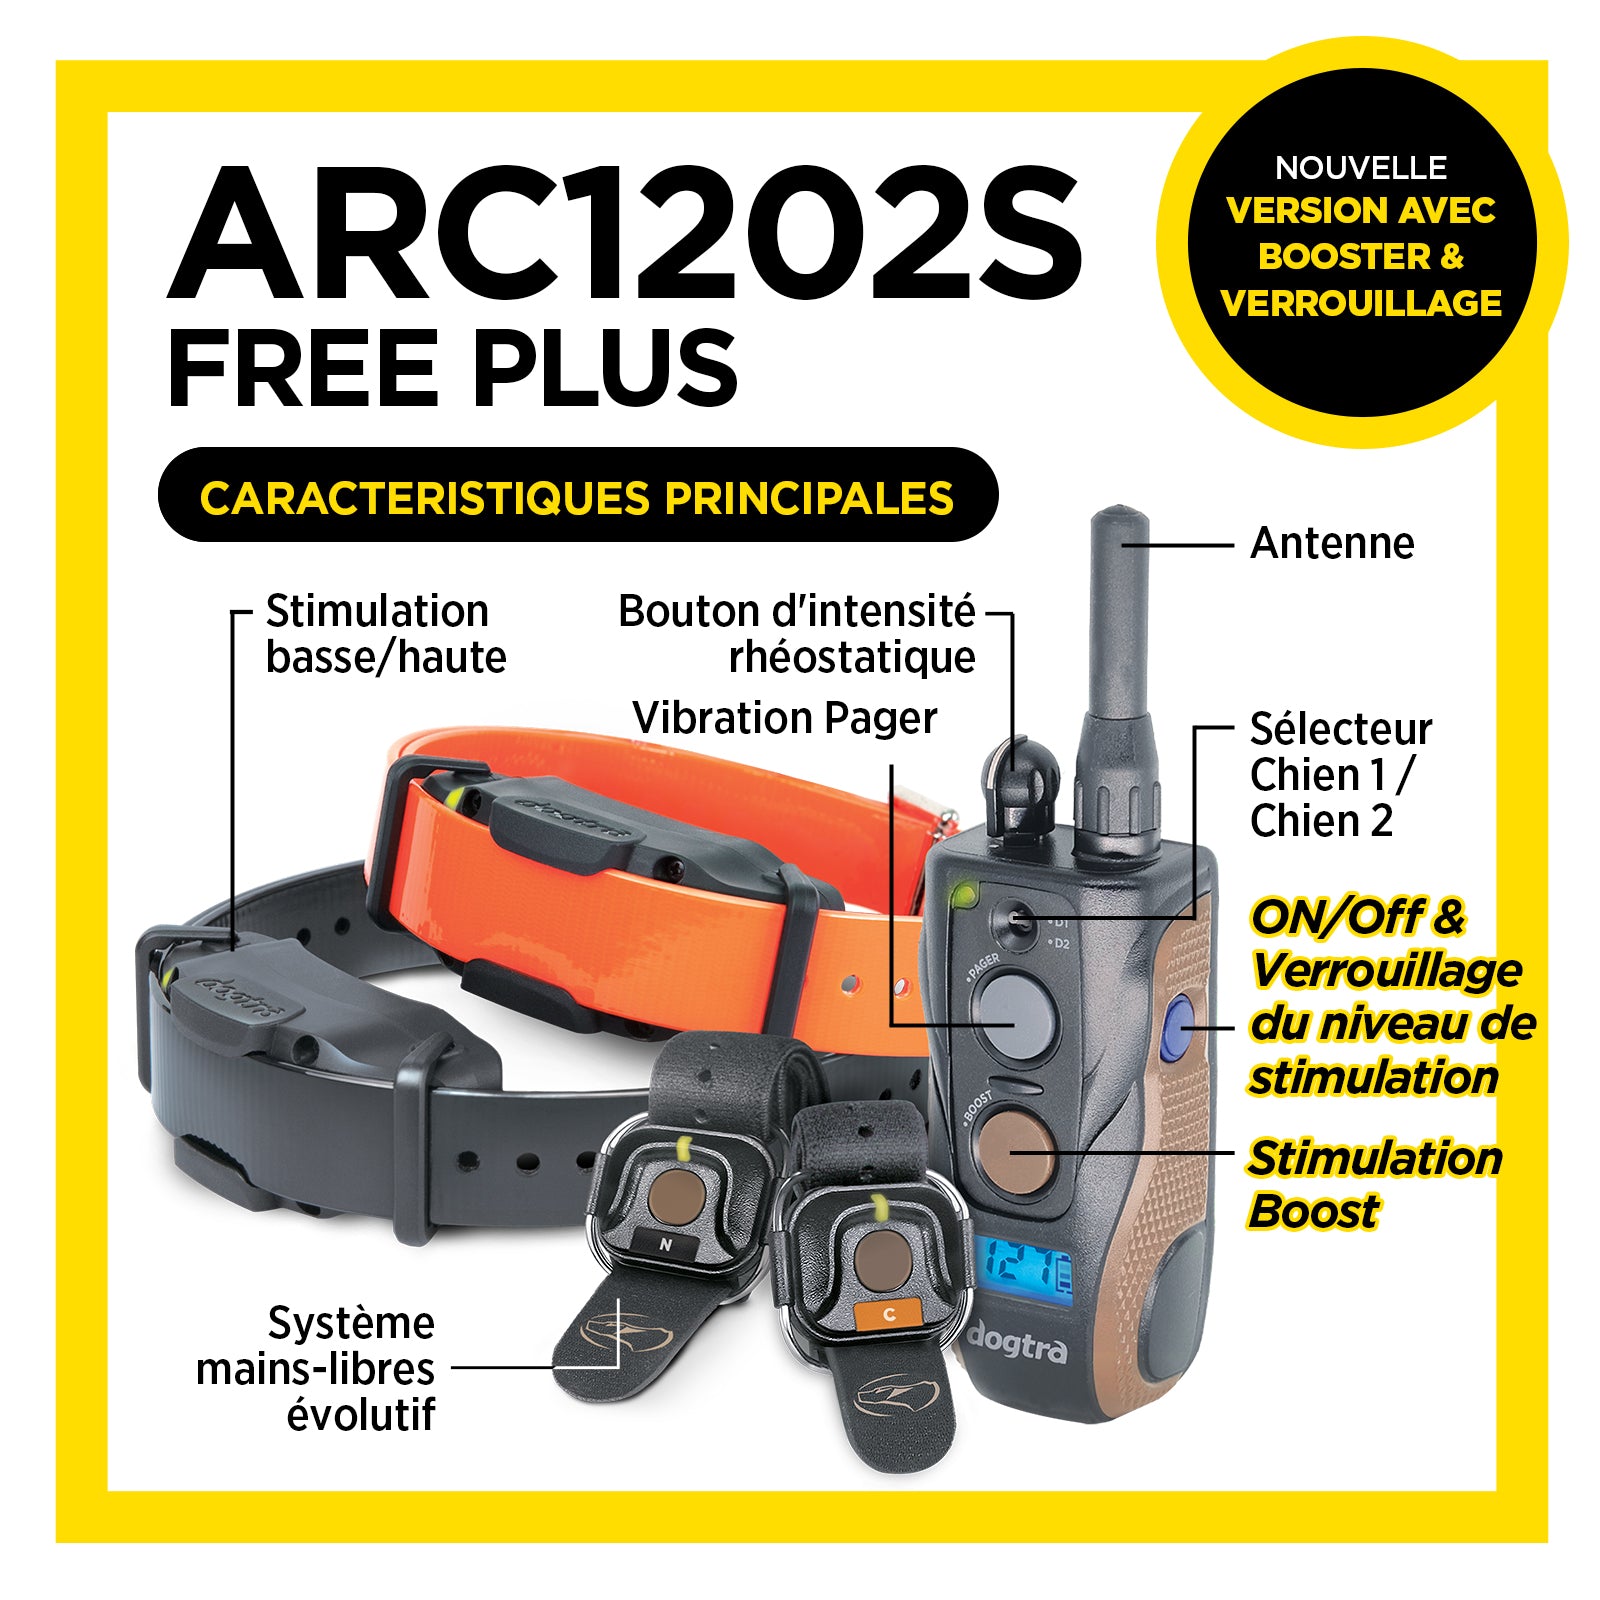 ARC1202S FREE PLUS